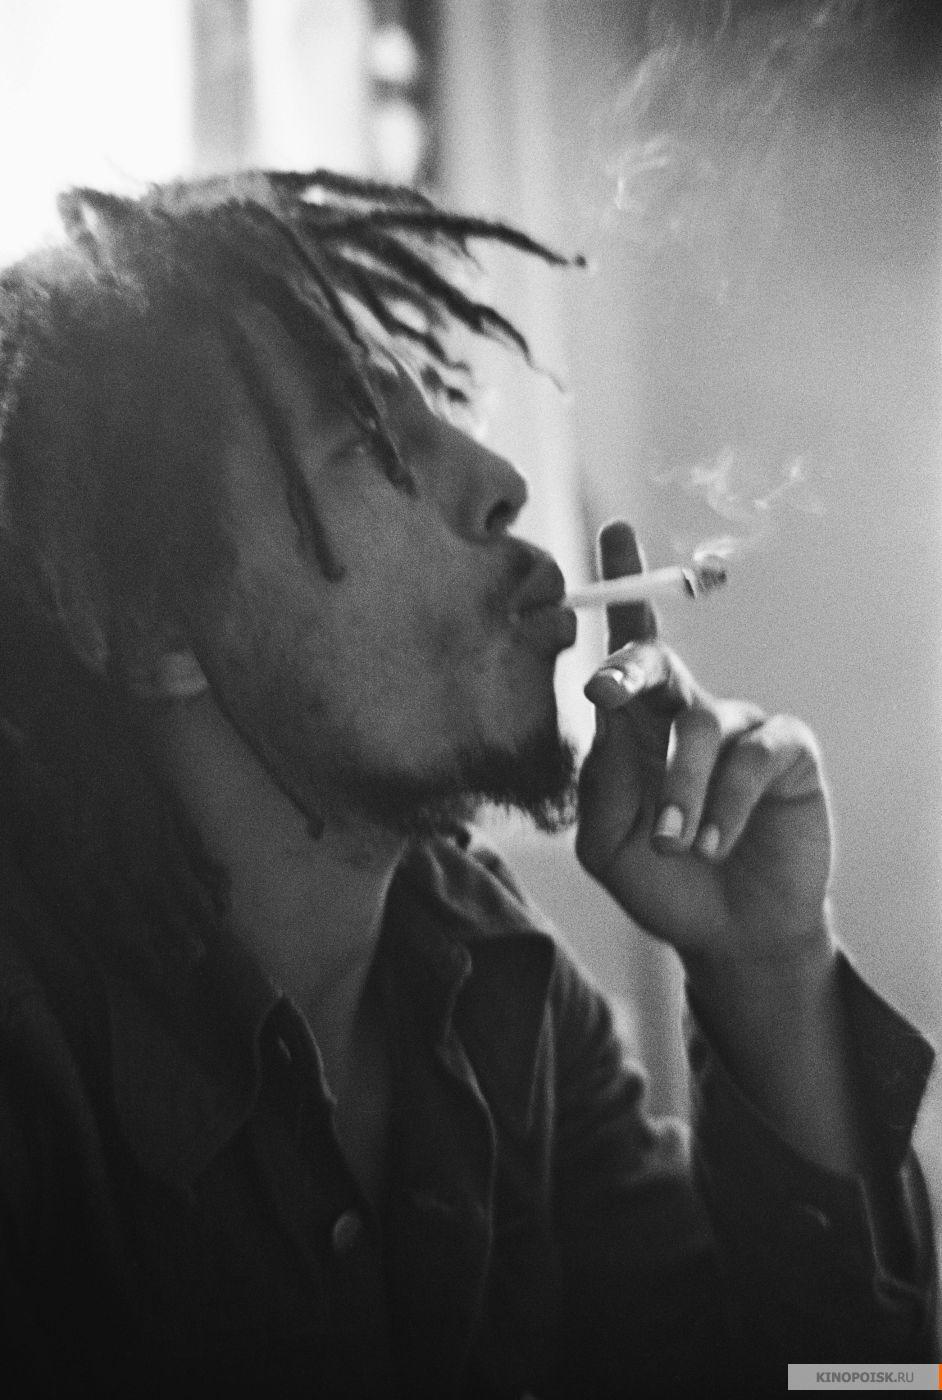 Photo №18205 Bob Marley.